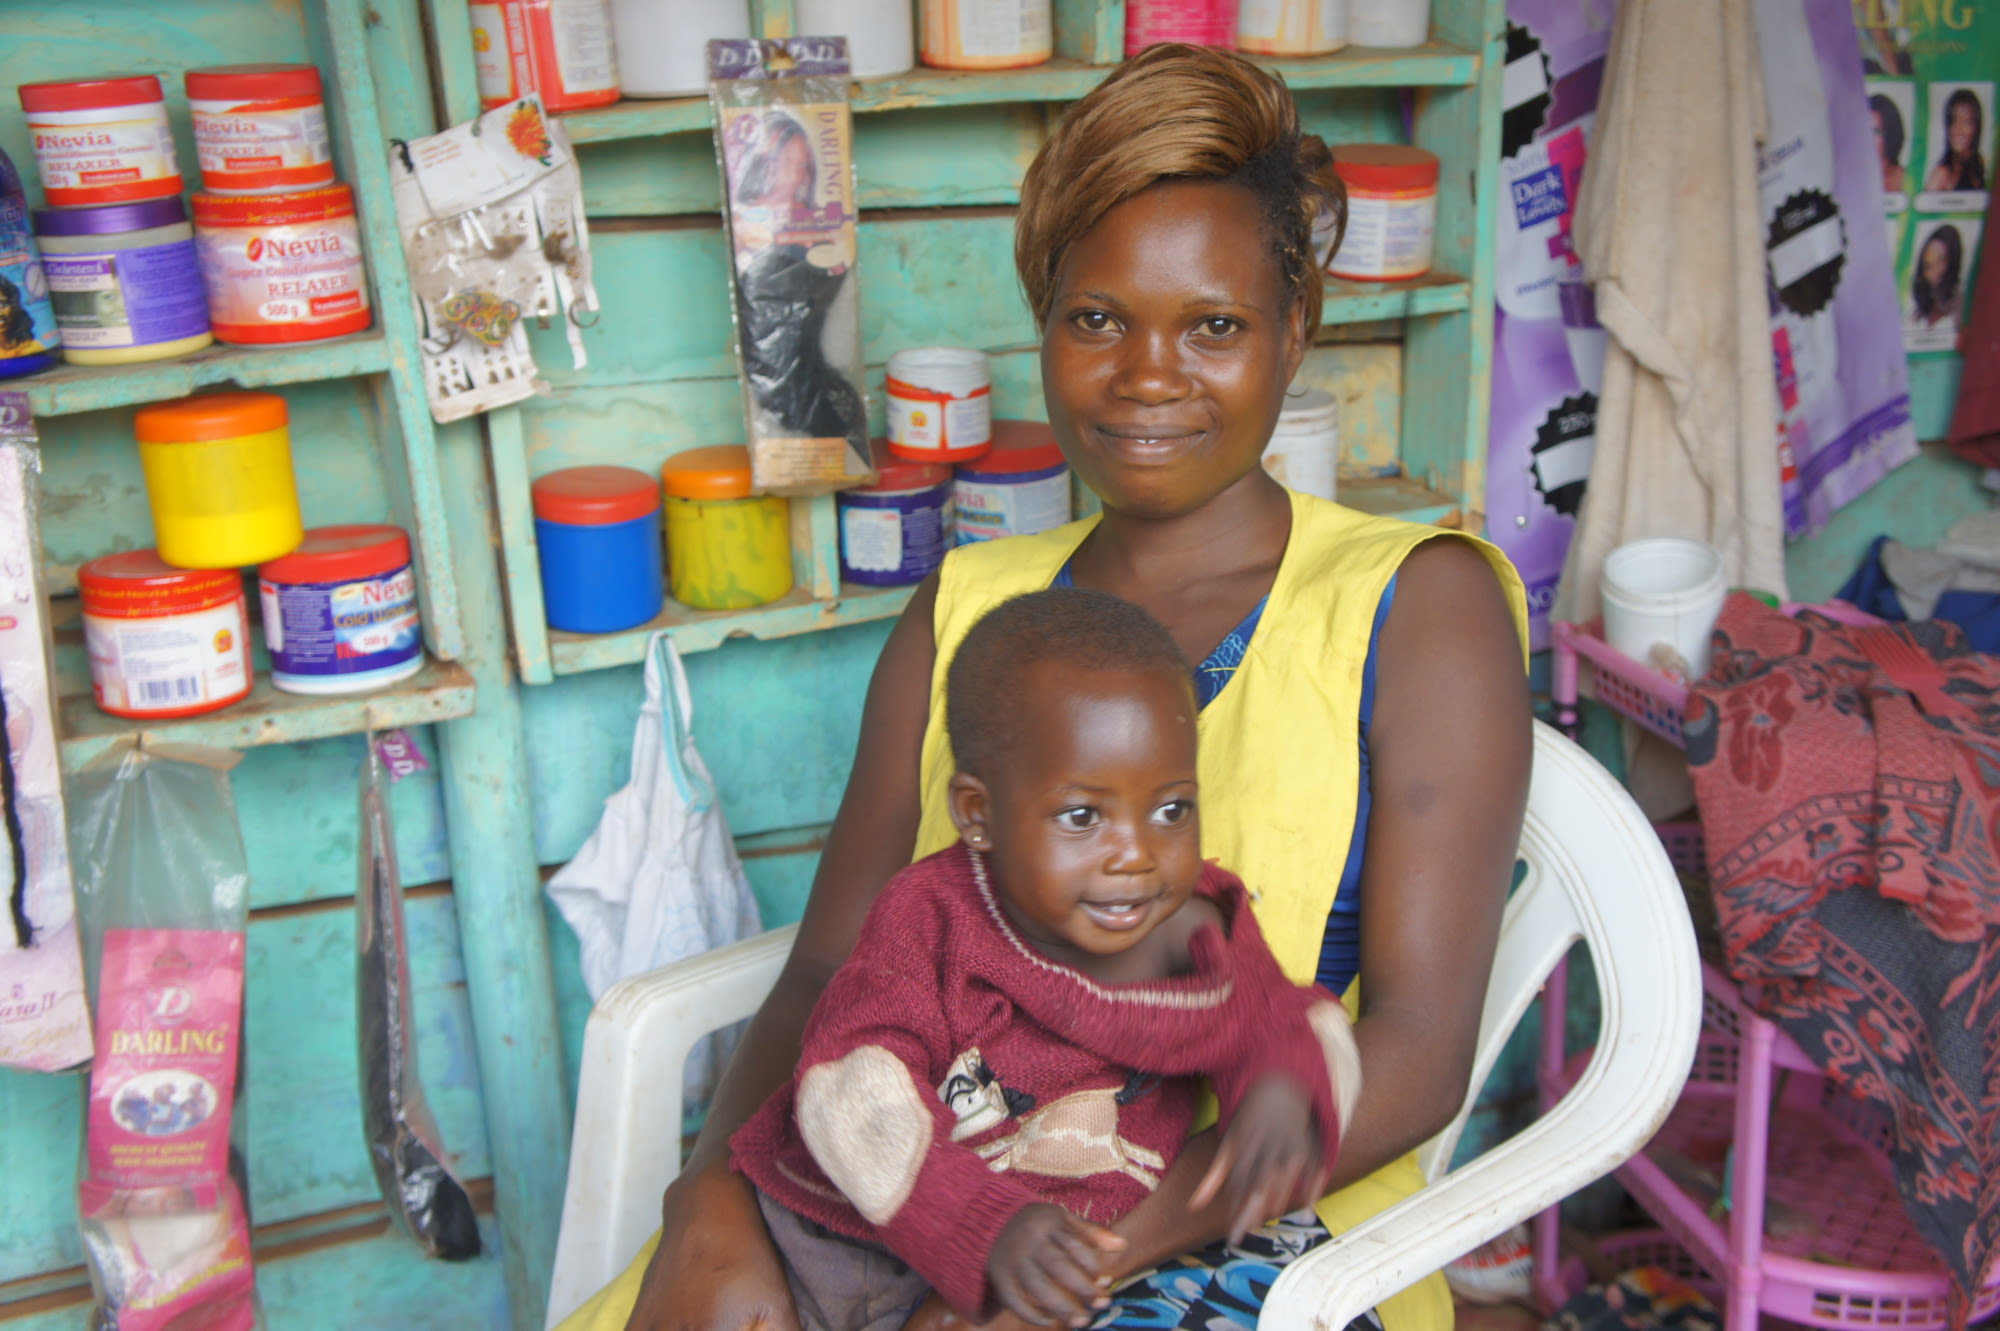 Sarah received a Kiva loan through Field Partner BRAC Uganda to fund her growing business.